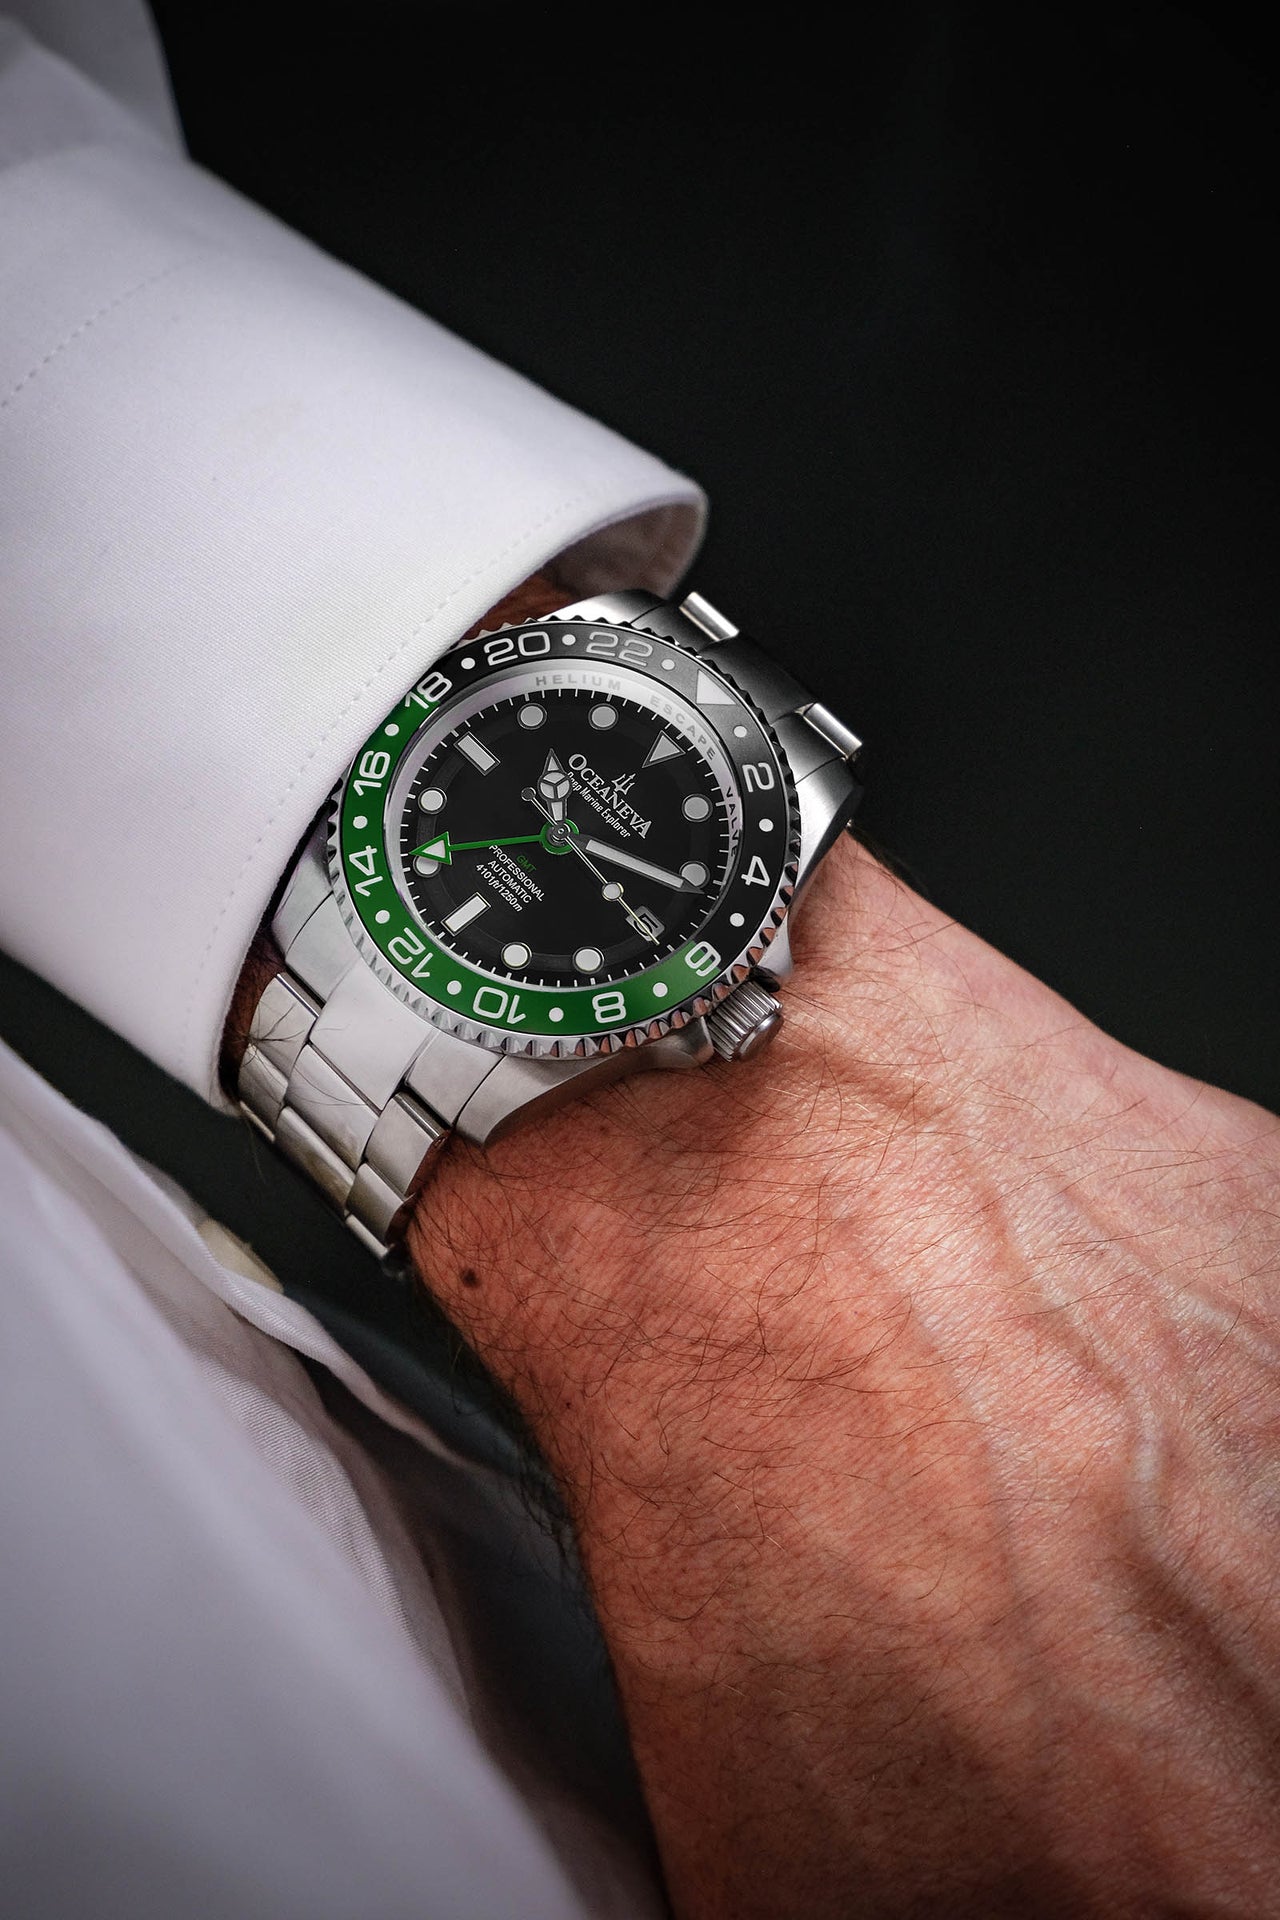 Oceaneva™ Men's GMT Automatic Deep Marine Explorer 1250M Pro Diver Black Green Bezel Watch